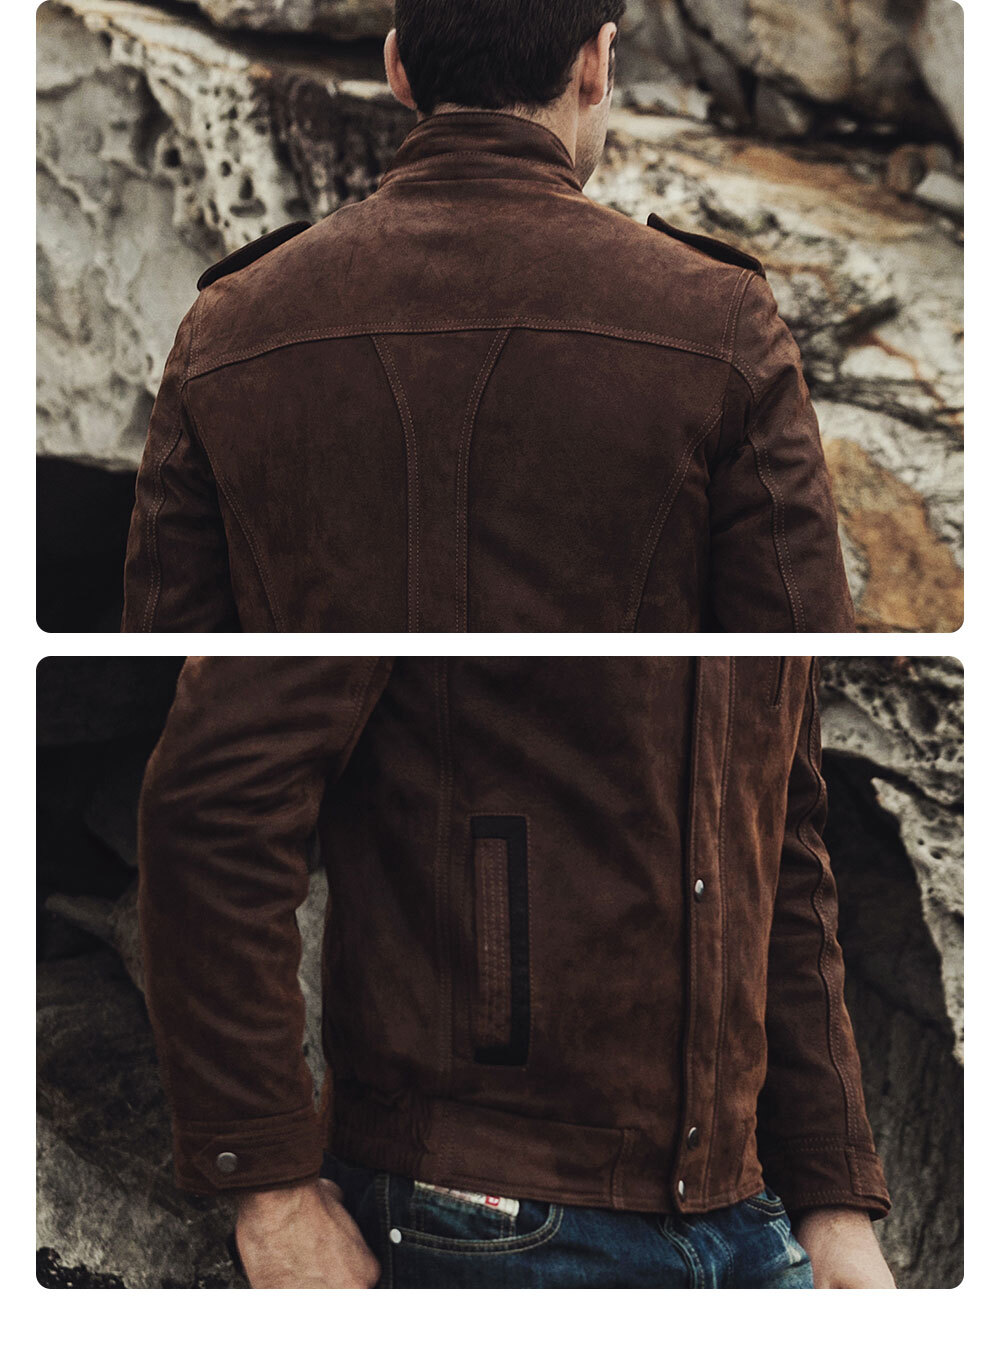 Men's Leather Jacket Brown Biker with multi Pockets M2017-20 Fashion flavor leather jacket brown biker| 100% polyester flavor leather jacket brown biker brands